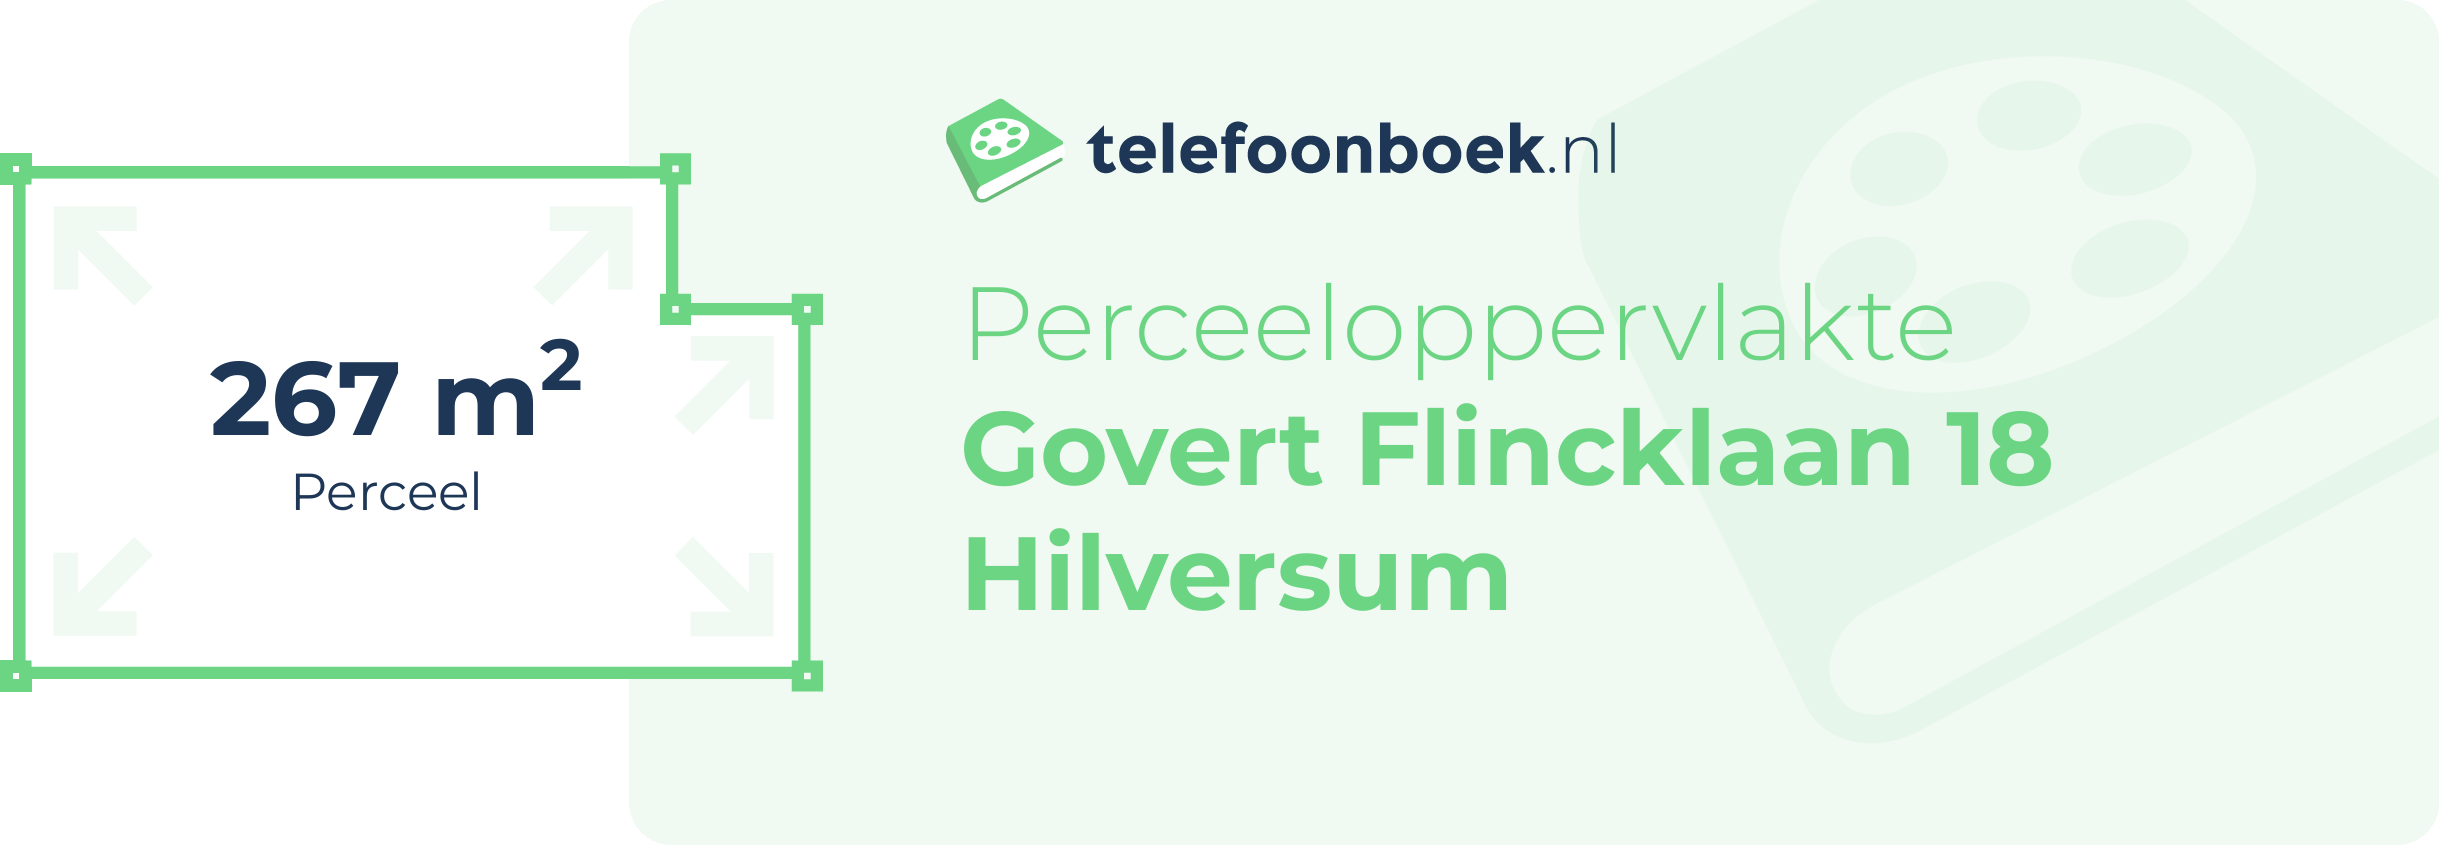 Perceeloppervlakte Govert Flincklaan 18 Hilversum